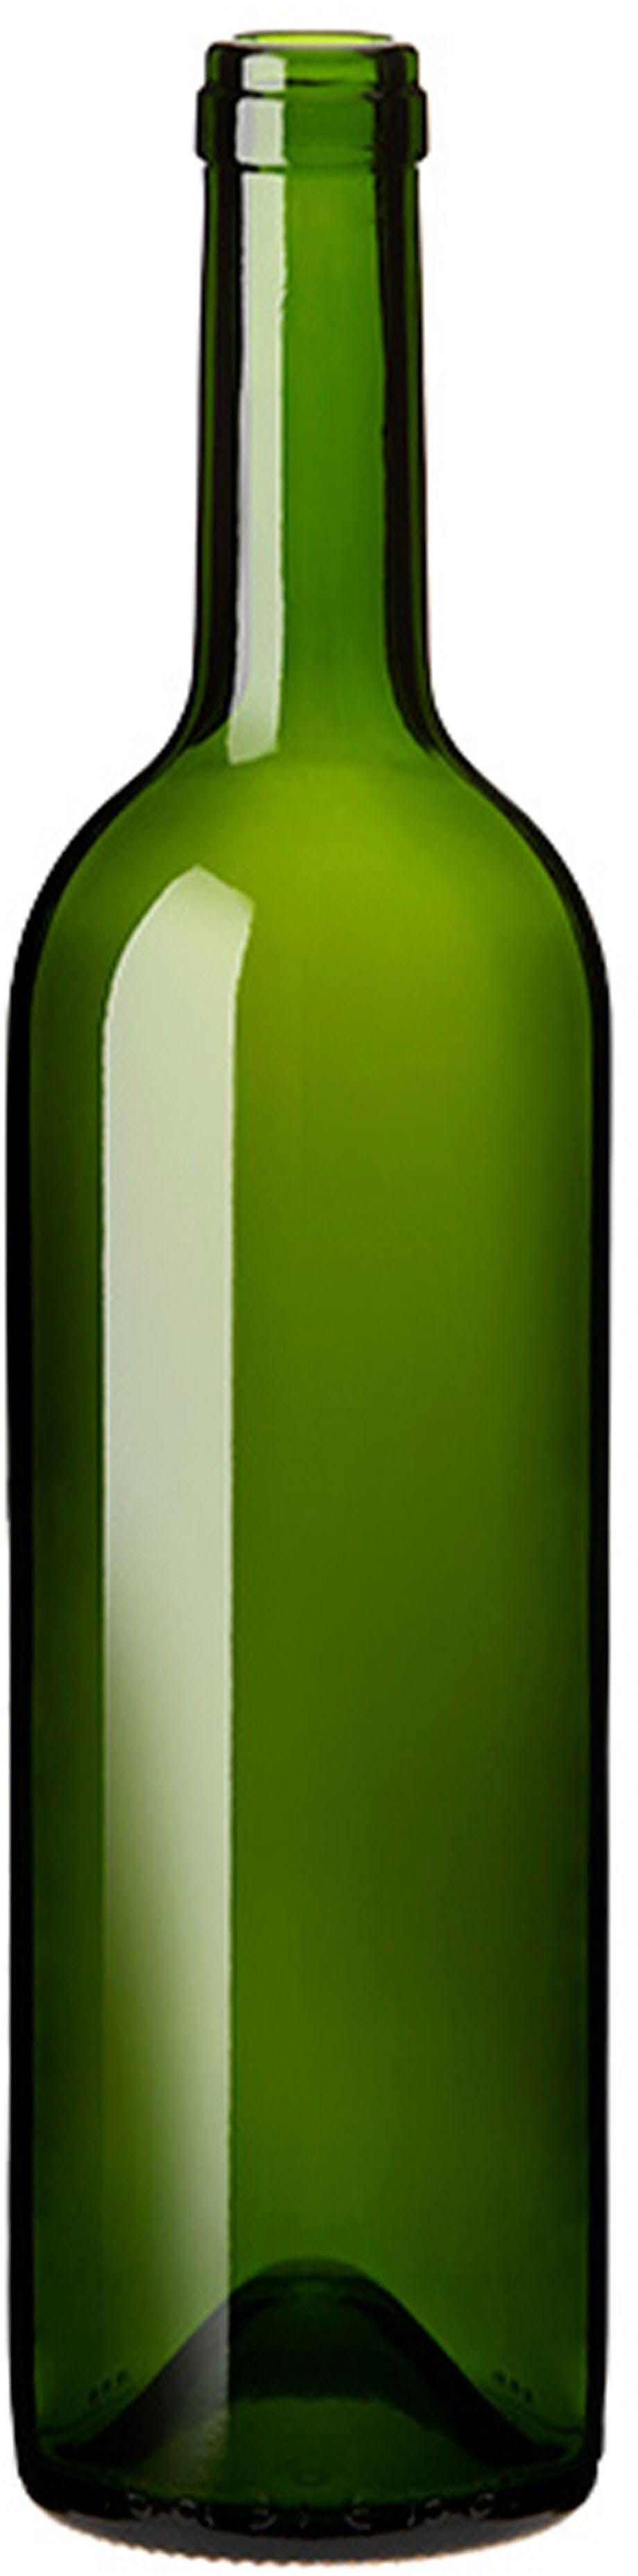 Bottle BORDOLESE  SEDUCCION 750 ml BG-Cork